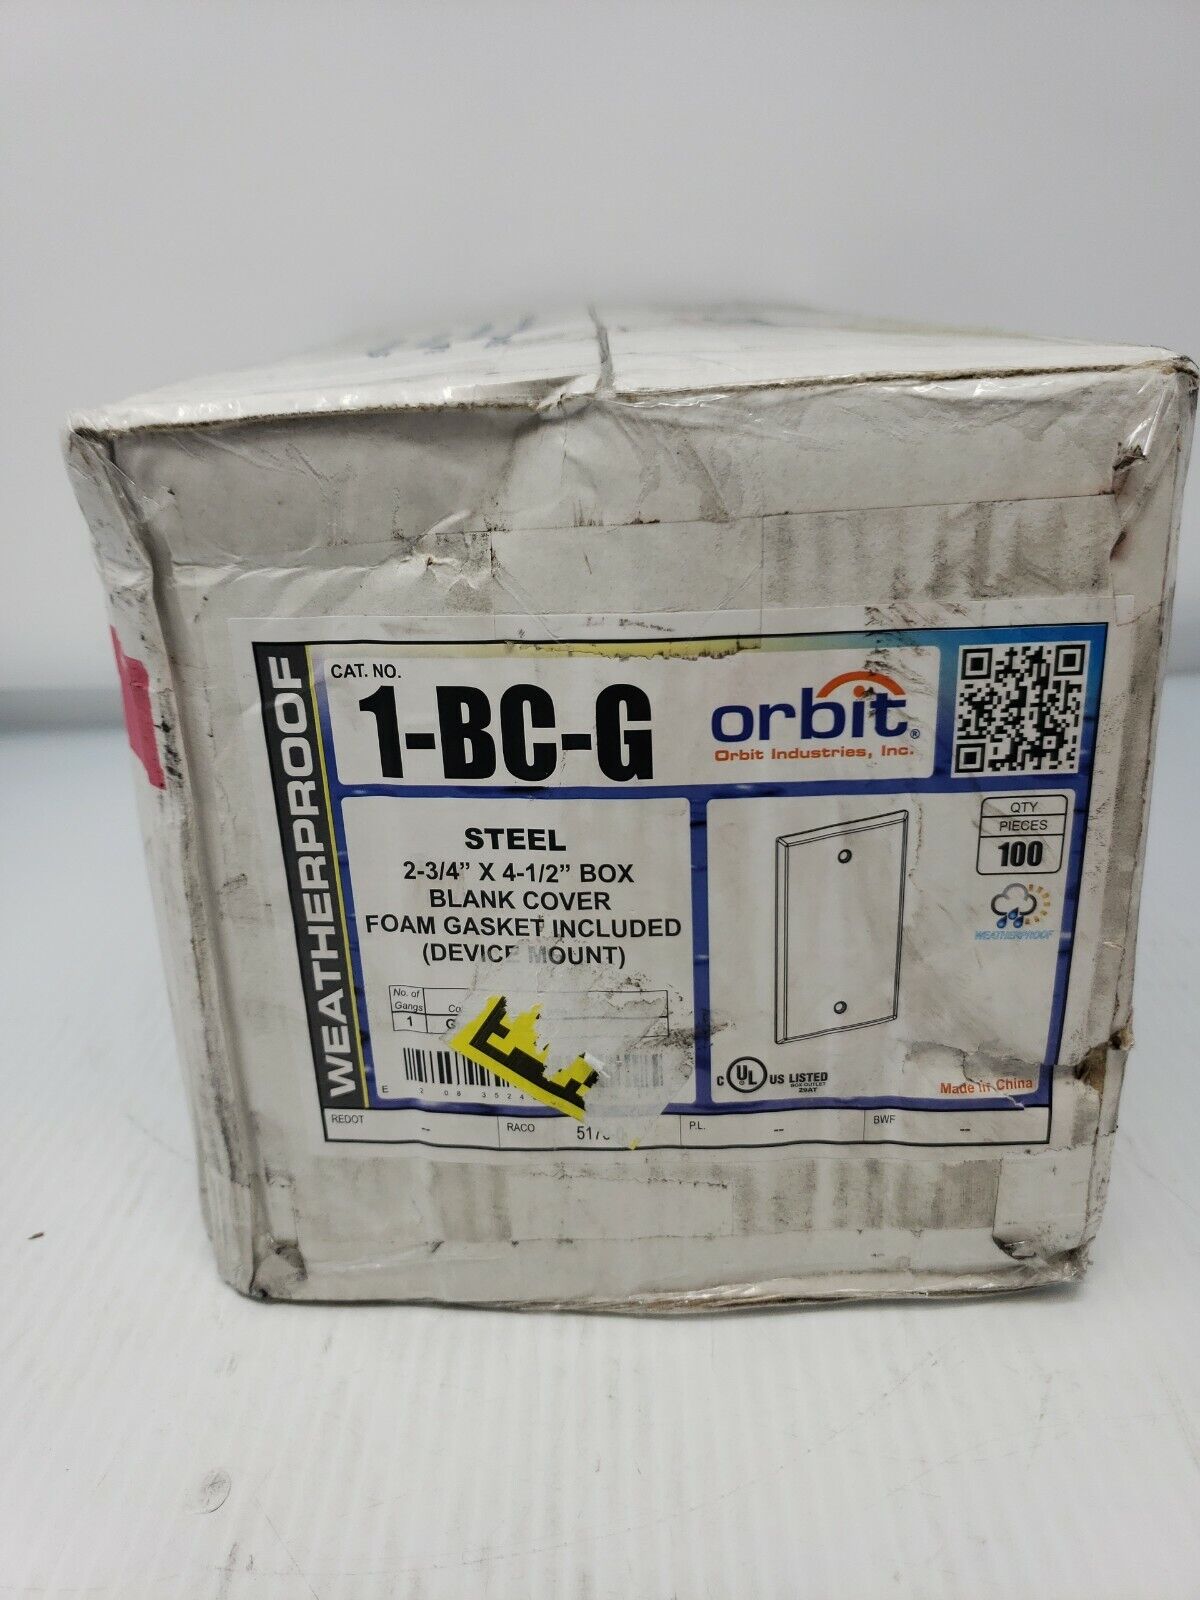 Orbit 1-BC-G Steel Blank of Box Philadelphia Mall 2021new shipping free Cover 100